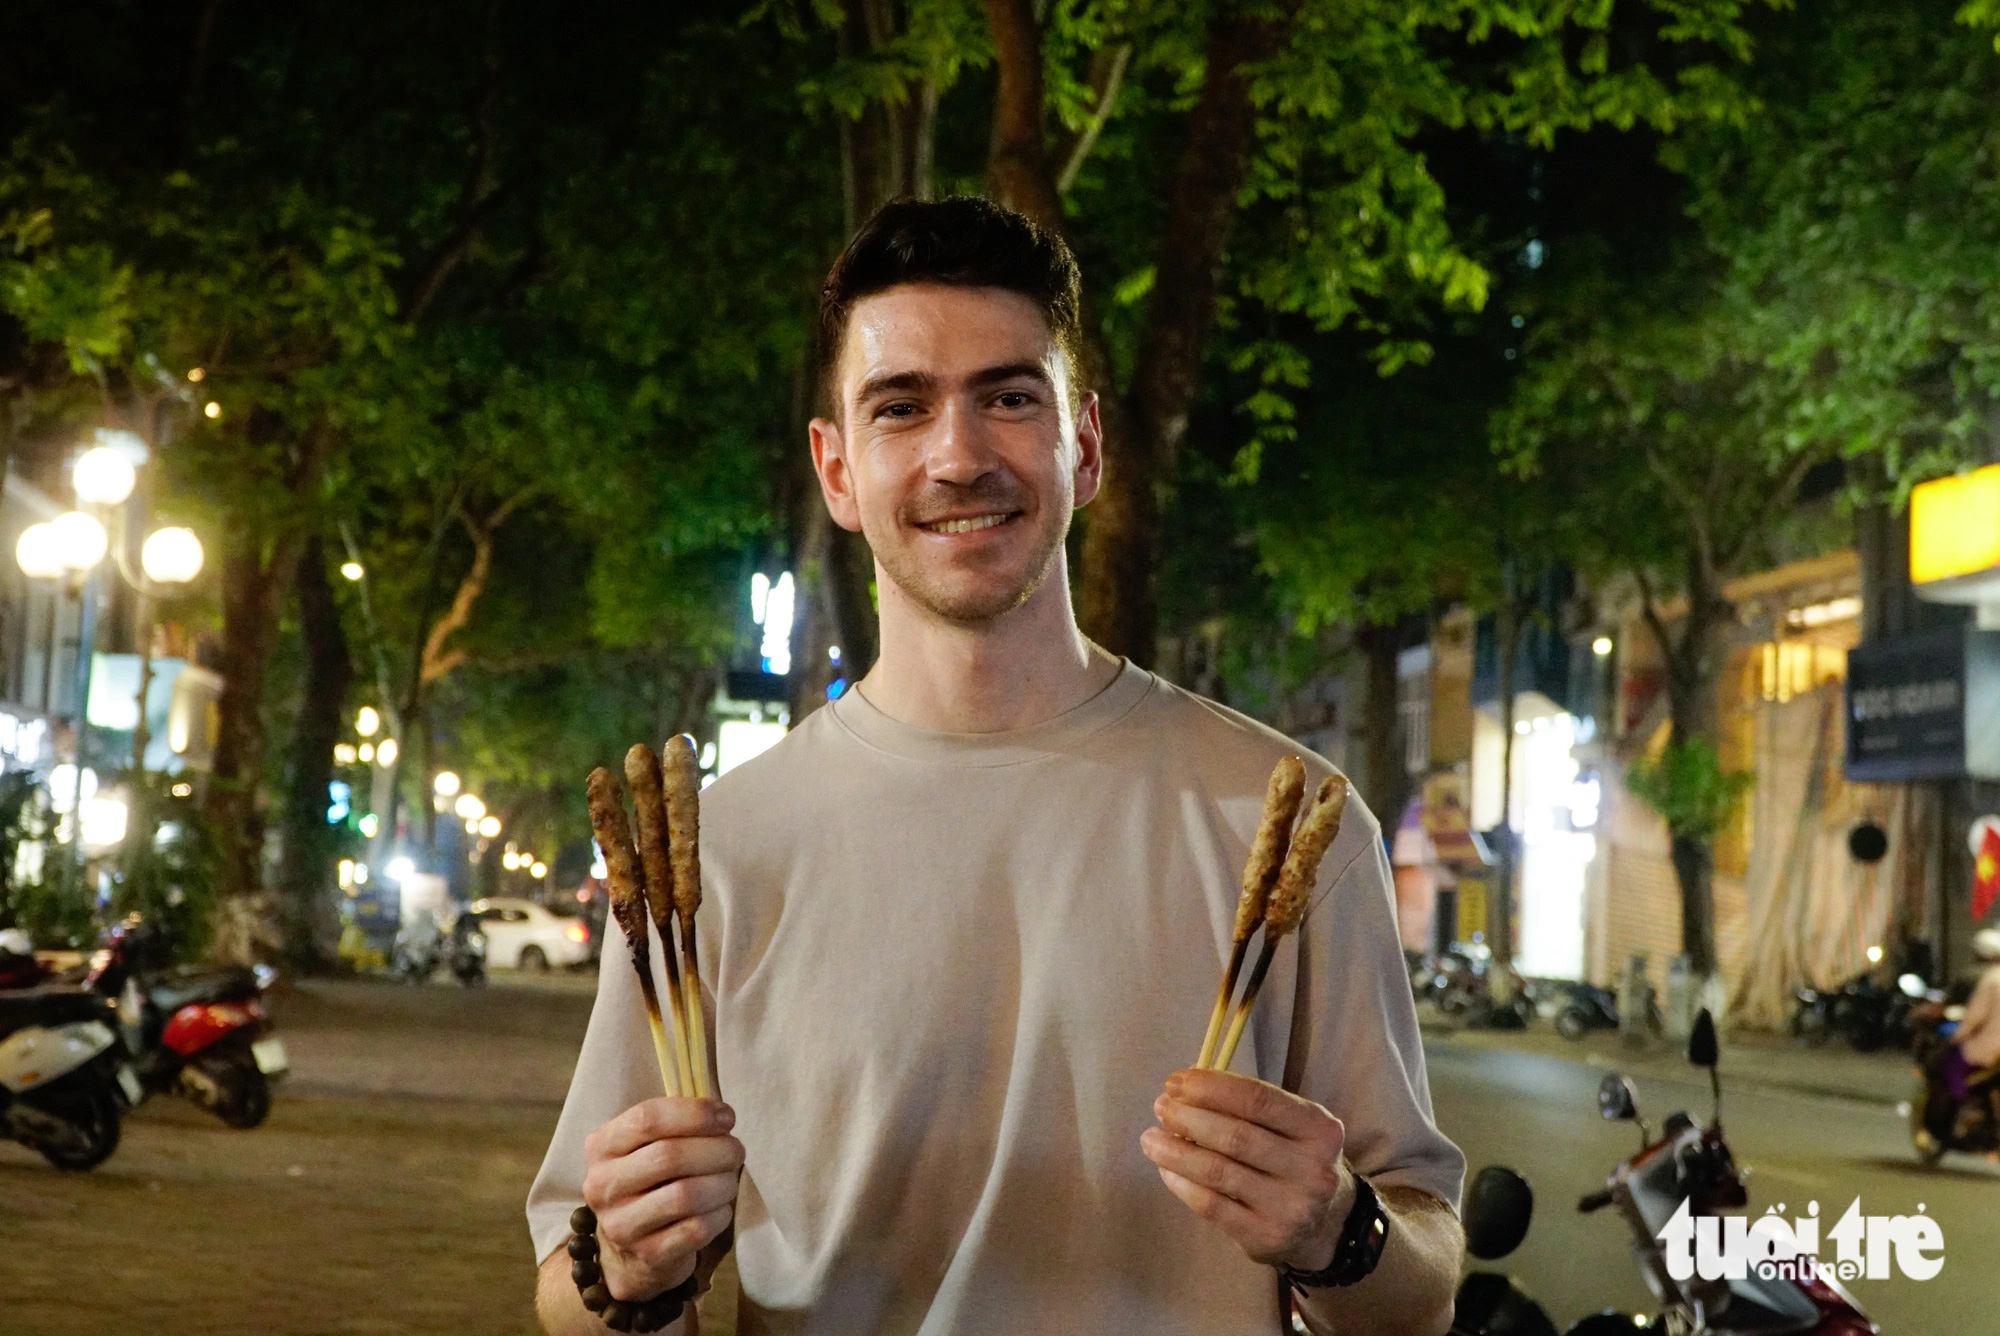 Swiss man serves Vietnamese flavors in Hanoi